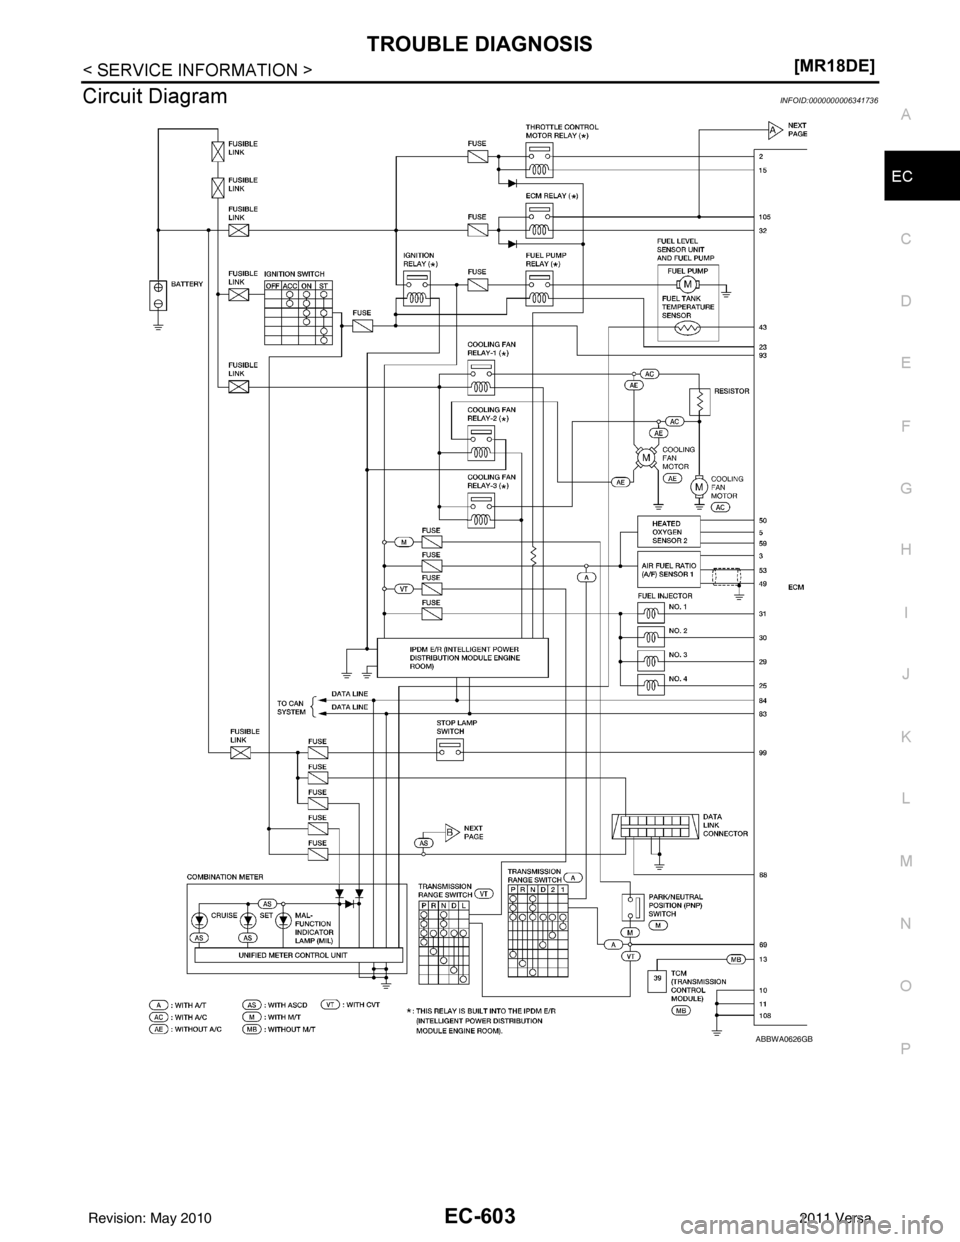 NISSAN LATIO 2011  Service Repair Manual TROUBLE DIAGNOSISEC-603
< SERVICE INFORMATION > [MR18DE]
C
D
E
F
G H
I
J
K L
M A
EC
NP
O
Circuit DiagramINFOID:0000000006341736
ABBWA0626GB
Revision: May 2010
2011 Versa 